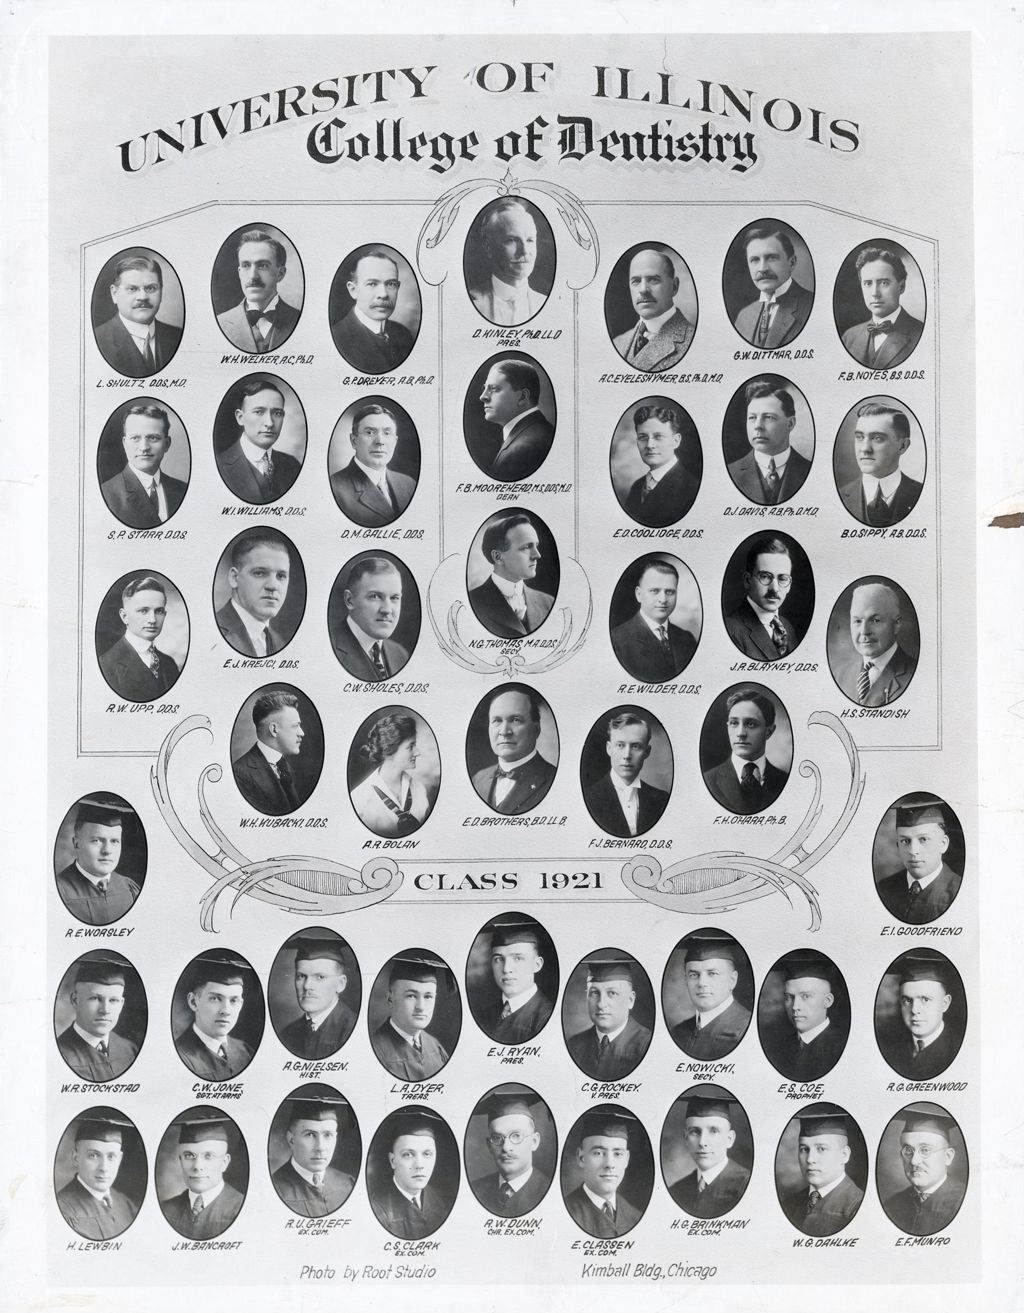 1921 graduating class, University of Illinois College of Dentistry